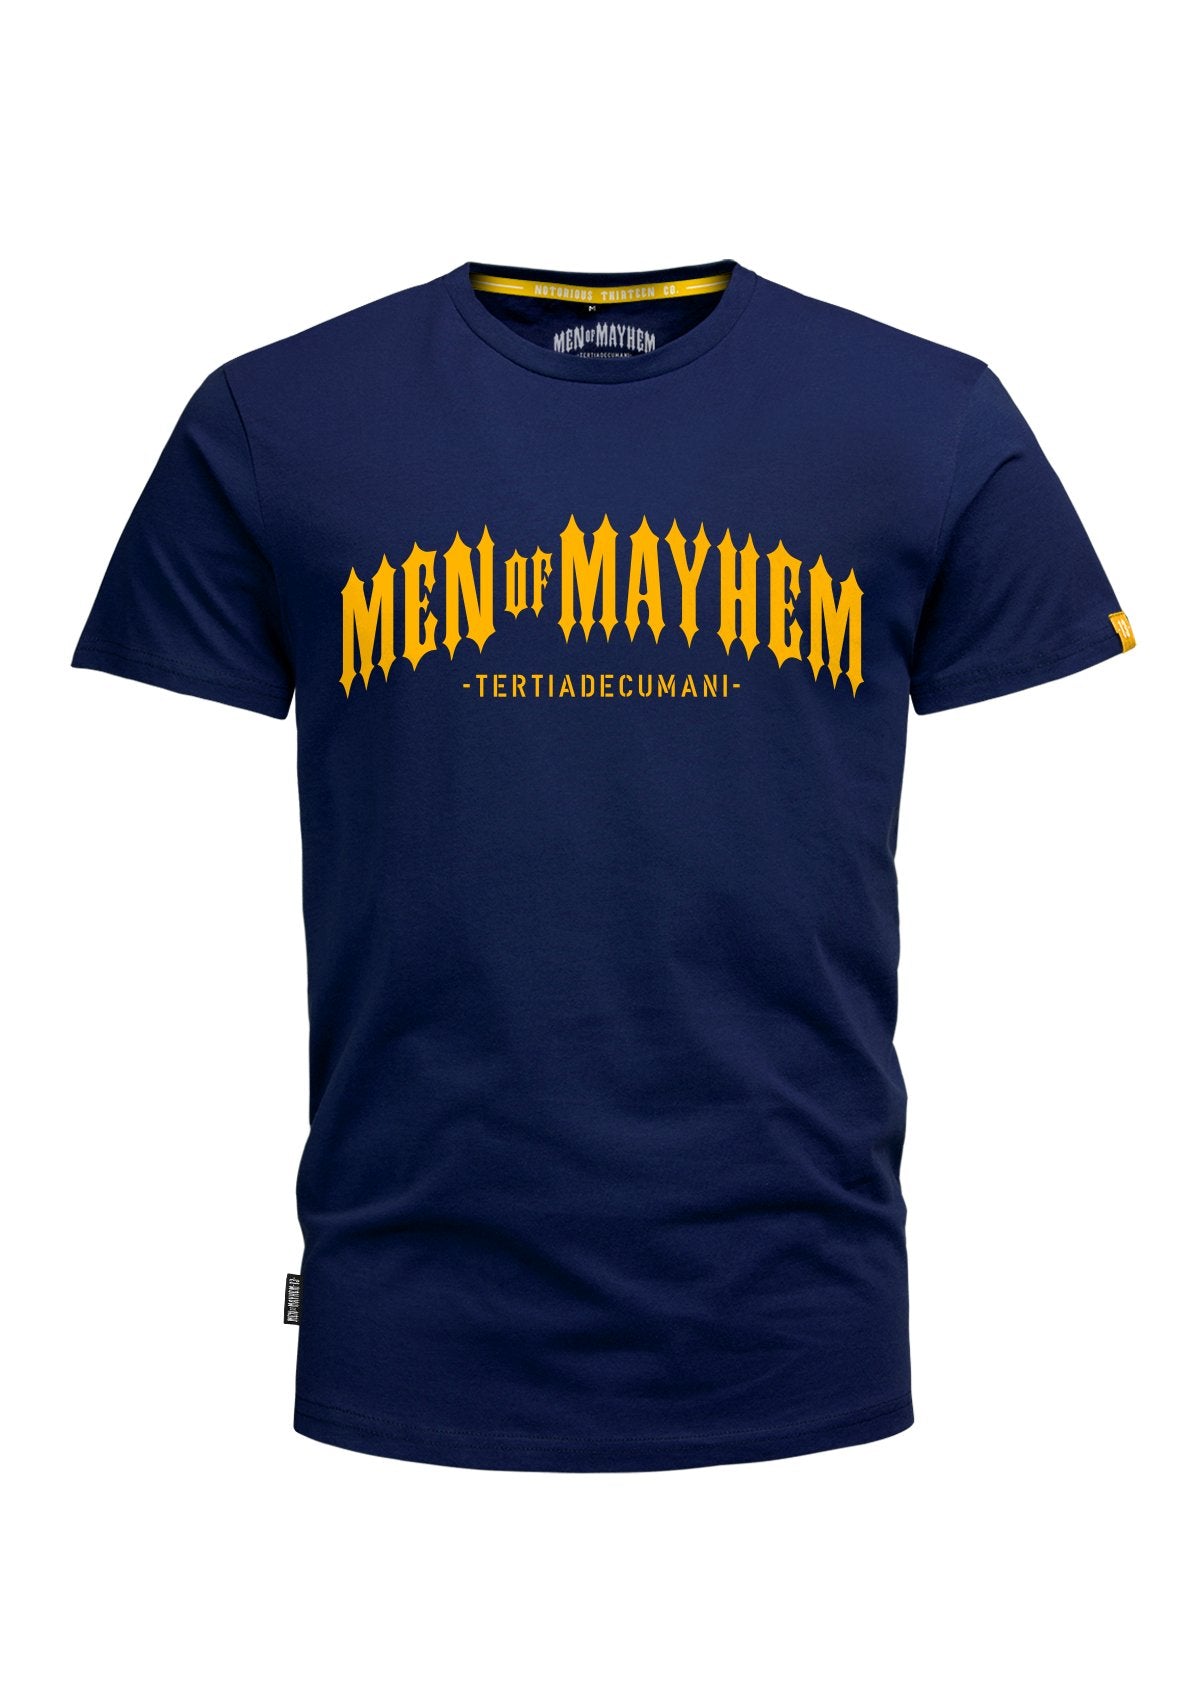 T-Shirt Mayhem Classic N/G - MEN OF MAYHEM - ALAIKO-EXCHANGES-MM-M-1010-MC-NG - Blau - blue